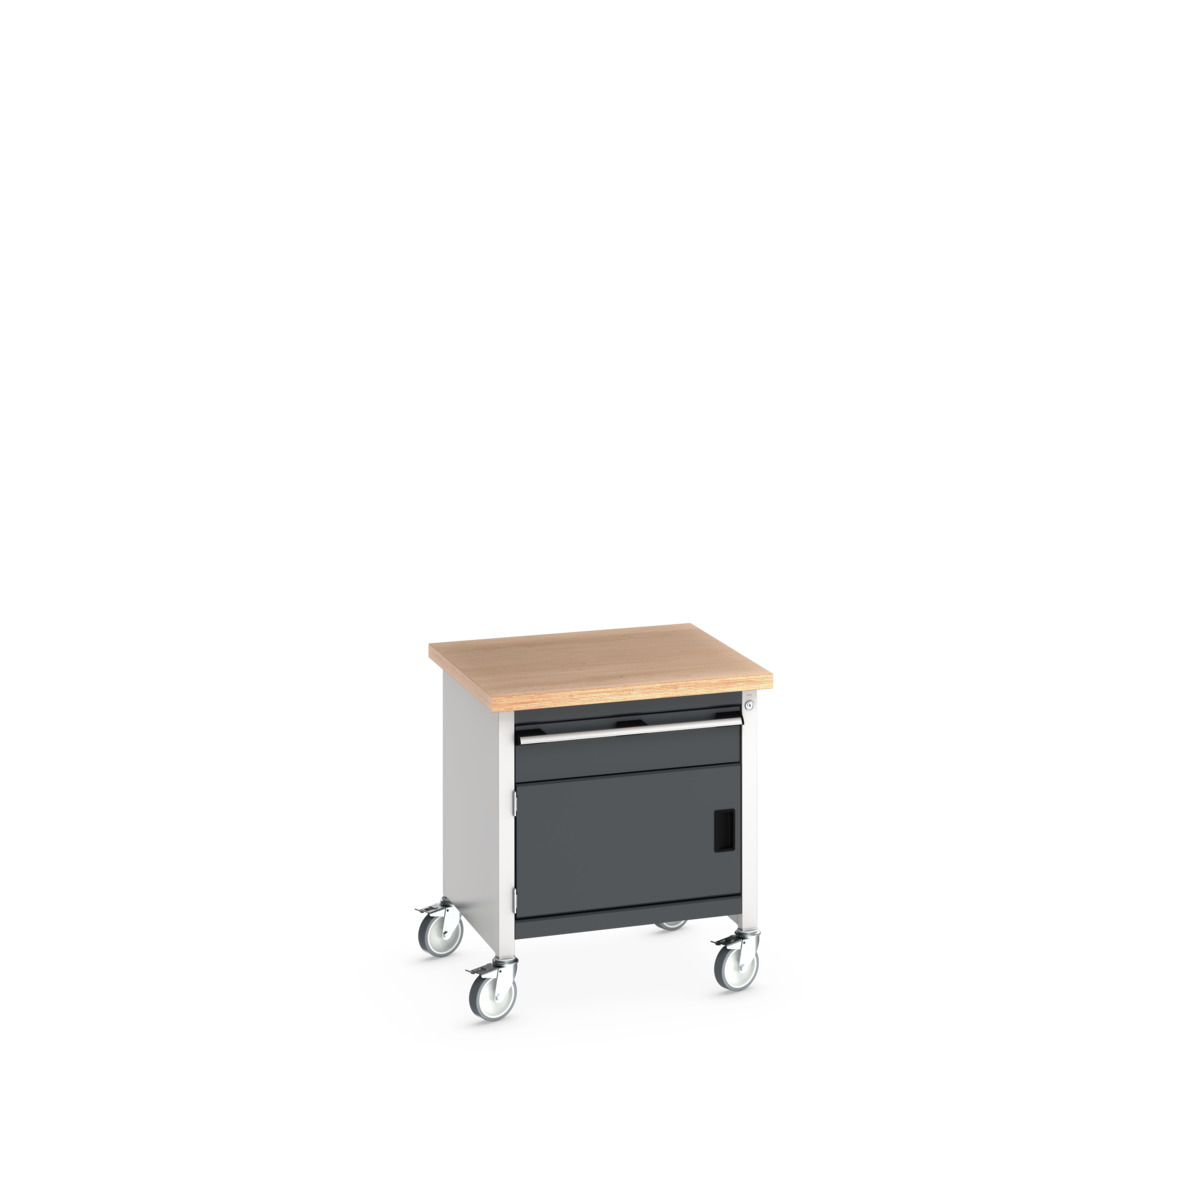 41002088. - cubio mobile storage bench (mpx)